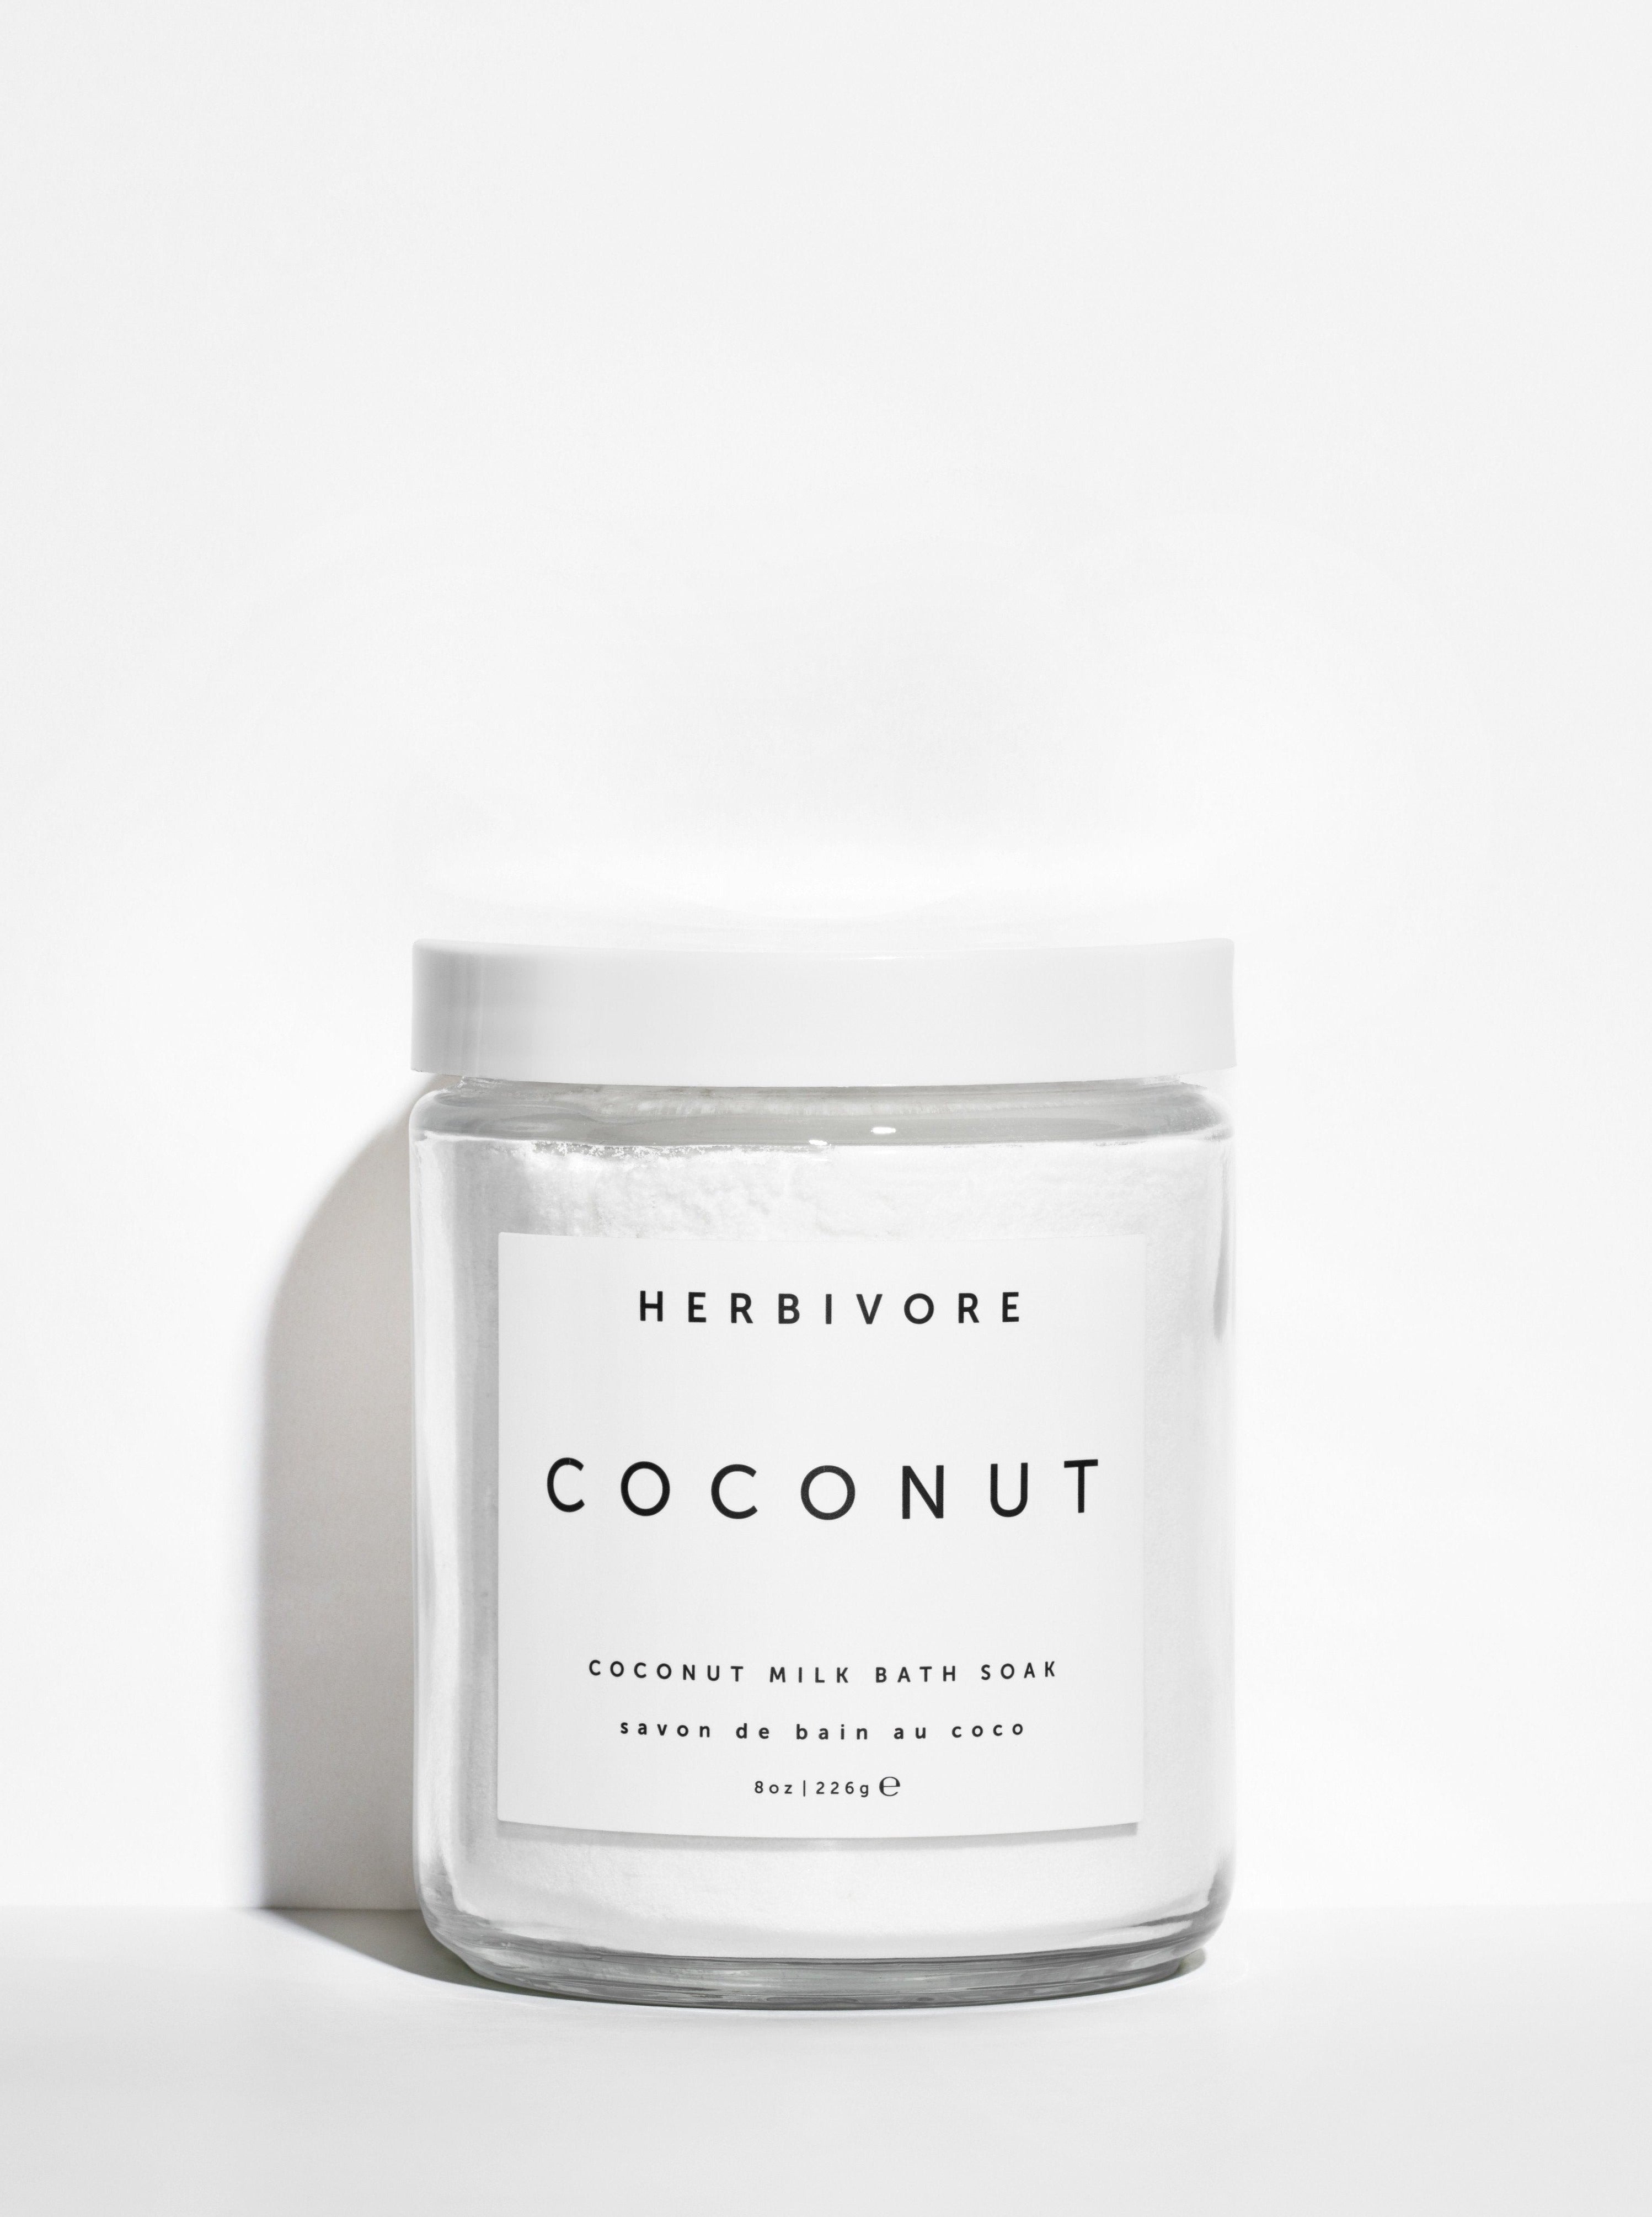 Herbivore Coconut Milk Bath Soak Product Shot